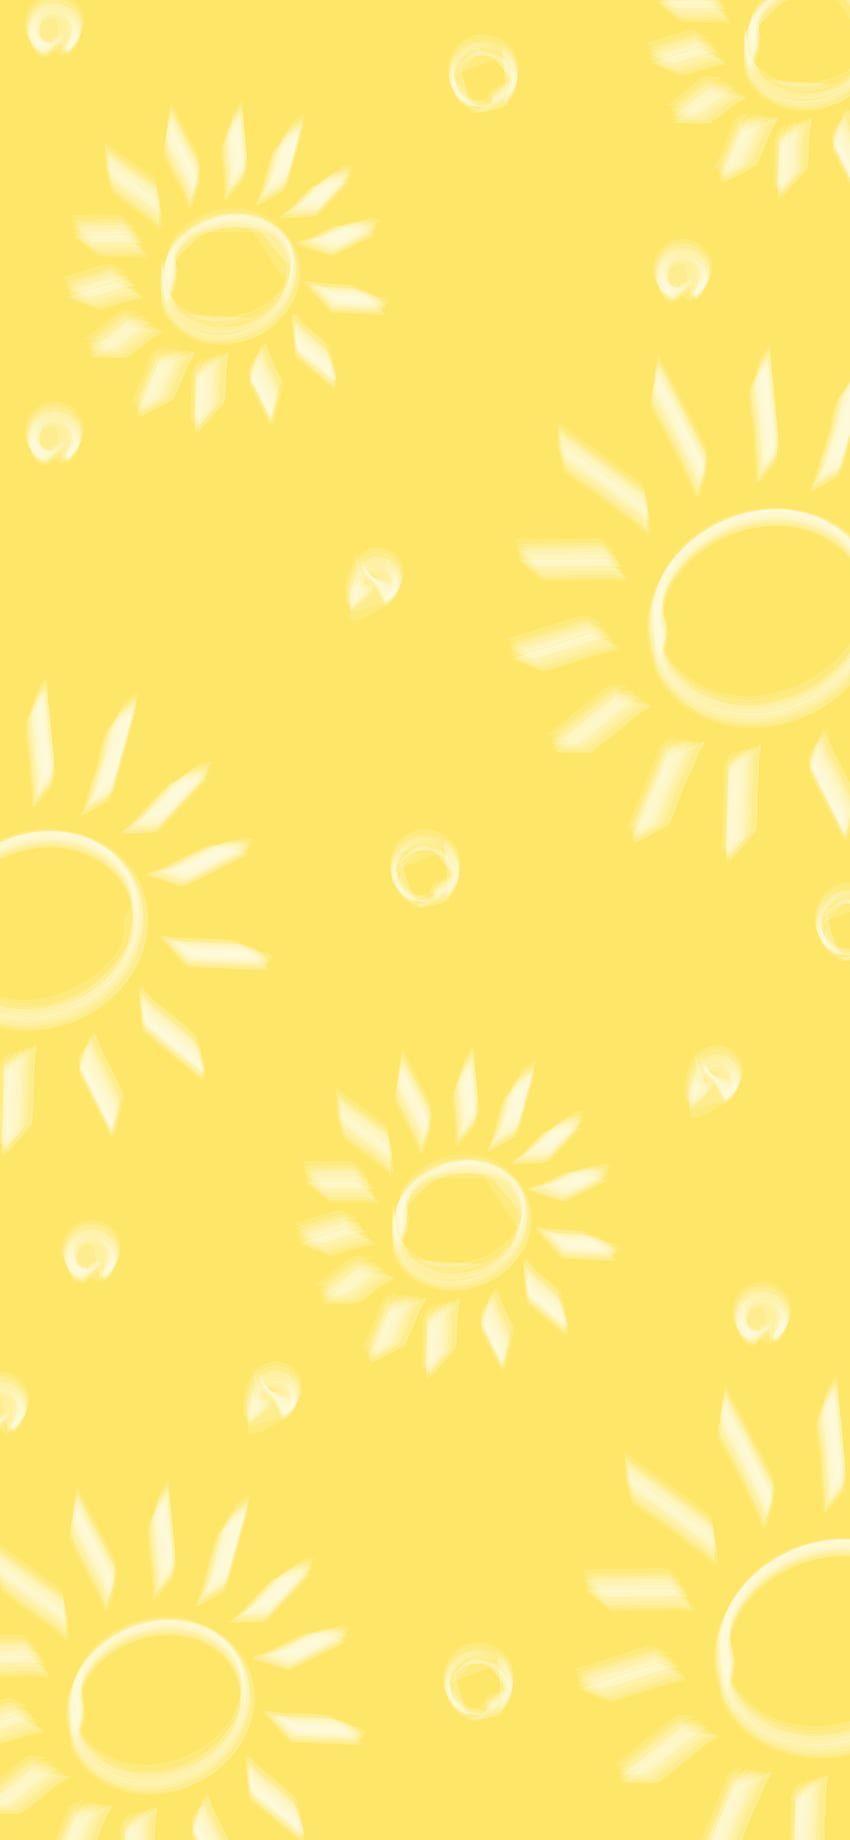 A cute pattern of white suns on a yellow background - Sunshine